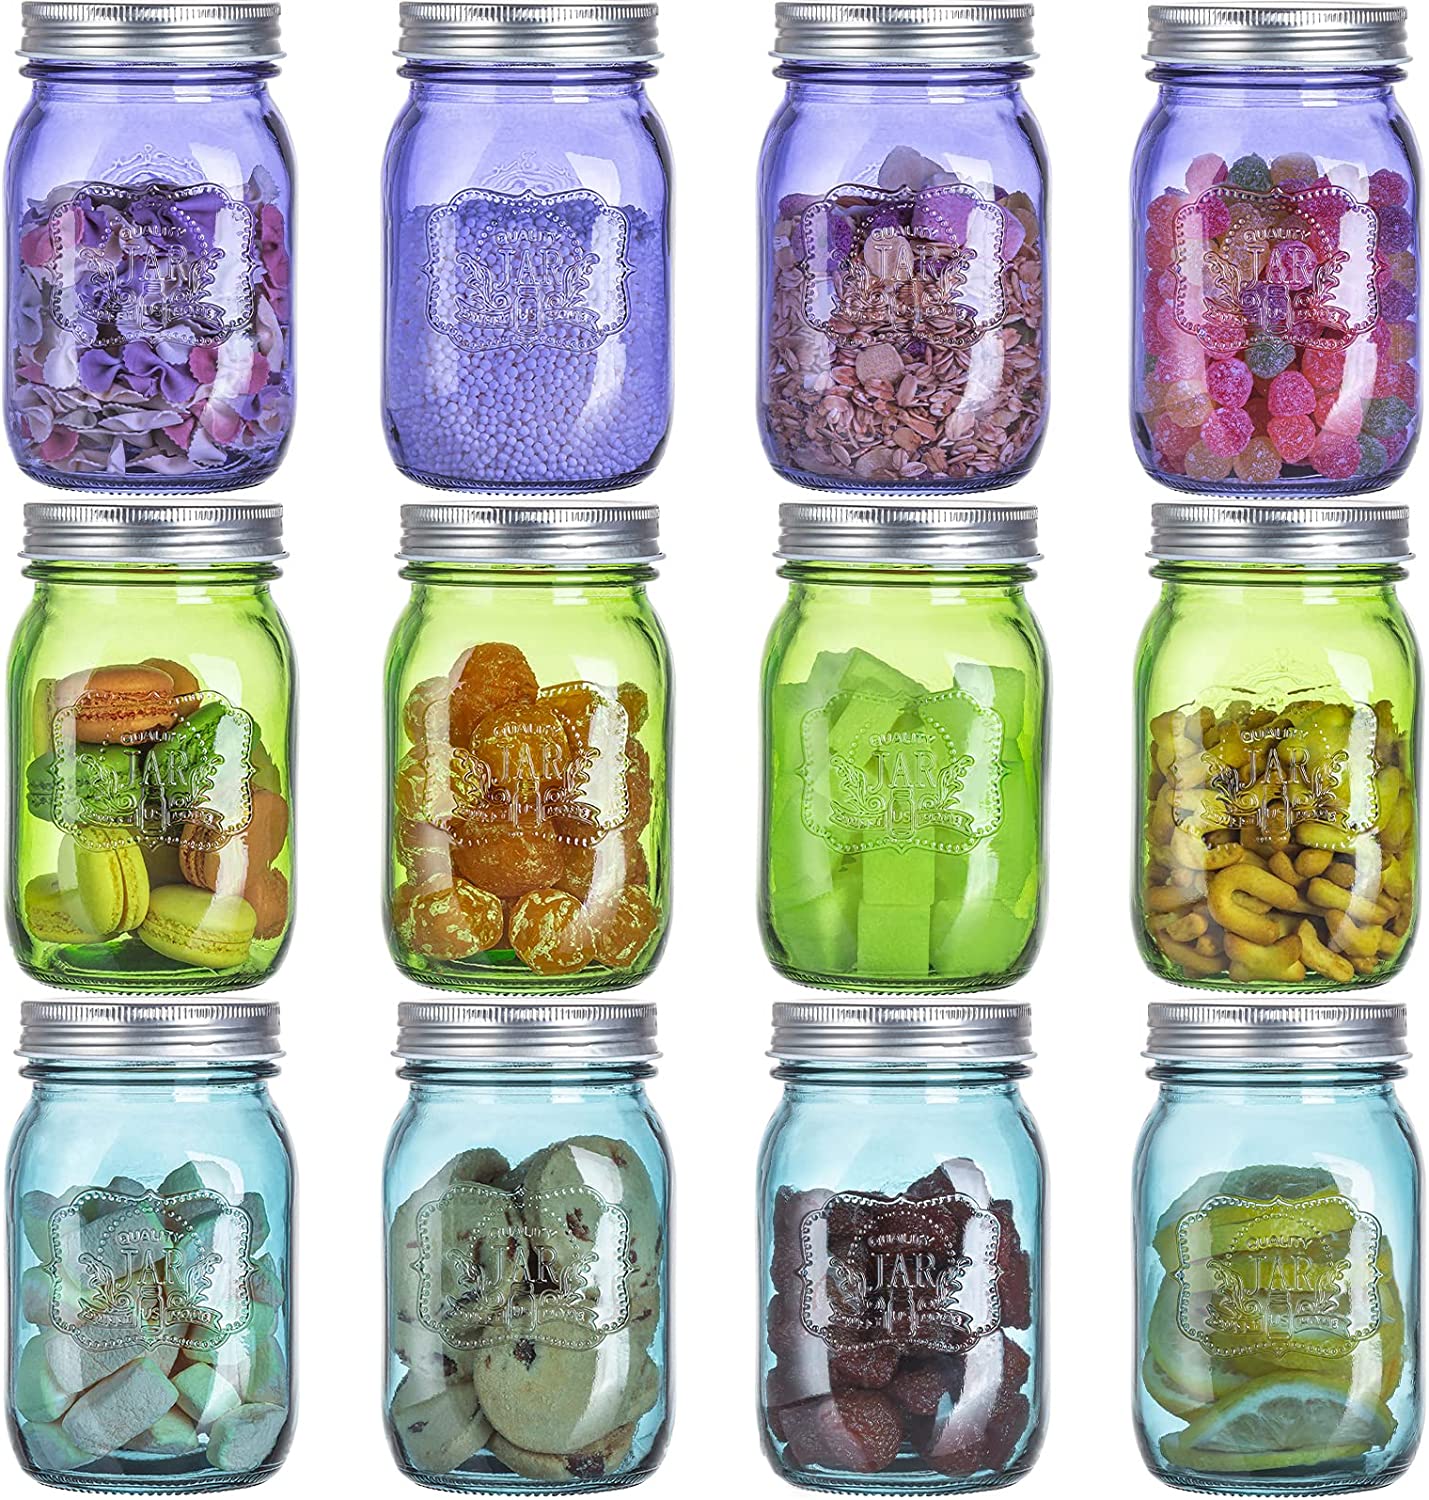 Mason Jar 16oz Glass Storage Jar with Metal Airtight Lid Colorful Food Storage Containers Kitchen Jars DIY Crafts